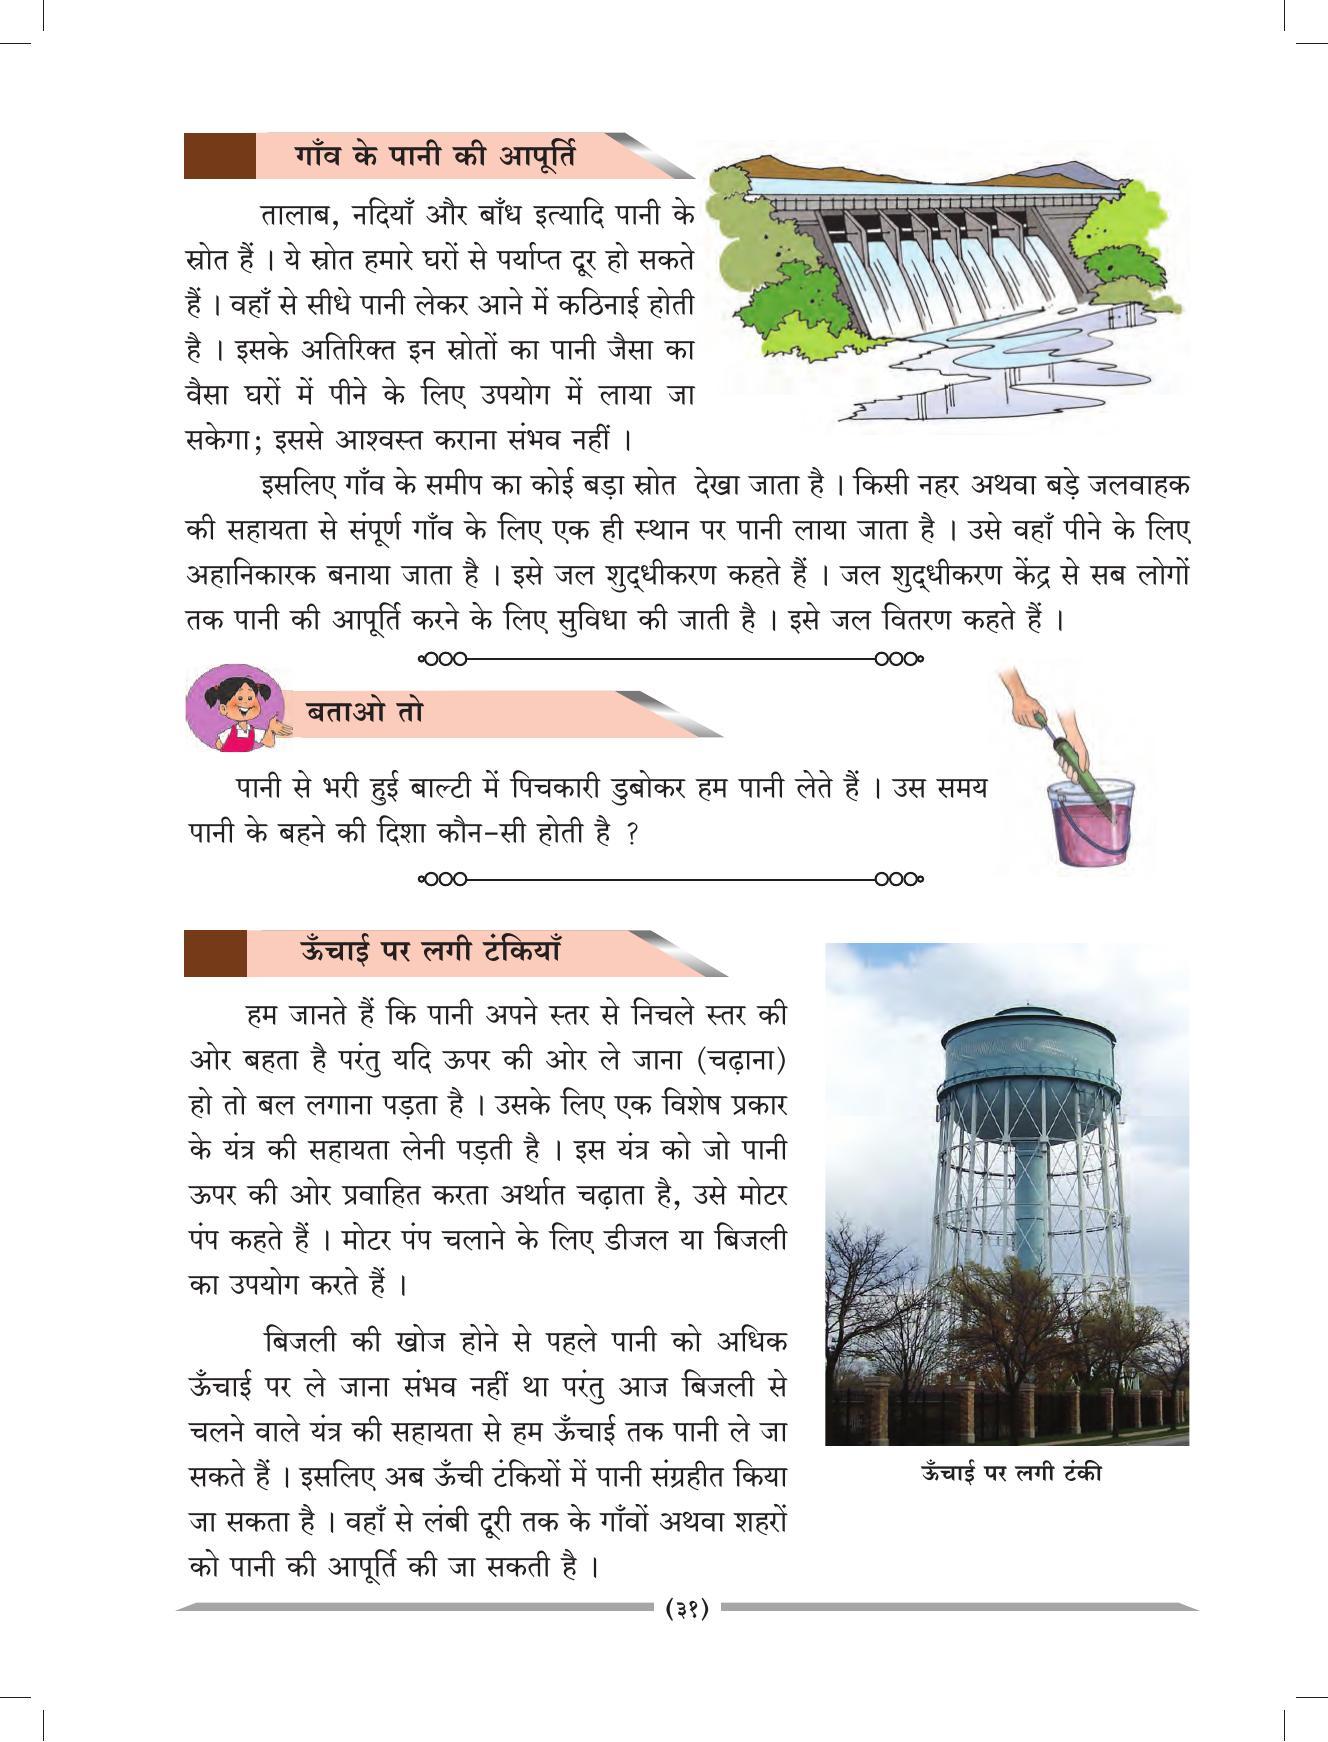 Maharashtra Board Class 4 EVS 1 (Hindi Medium) Textbook - Page 41